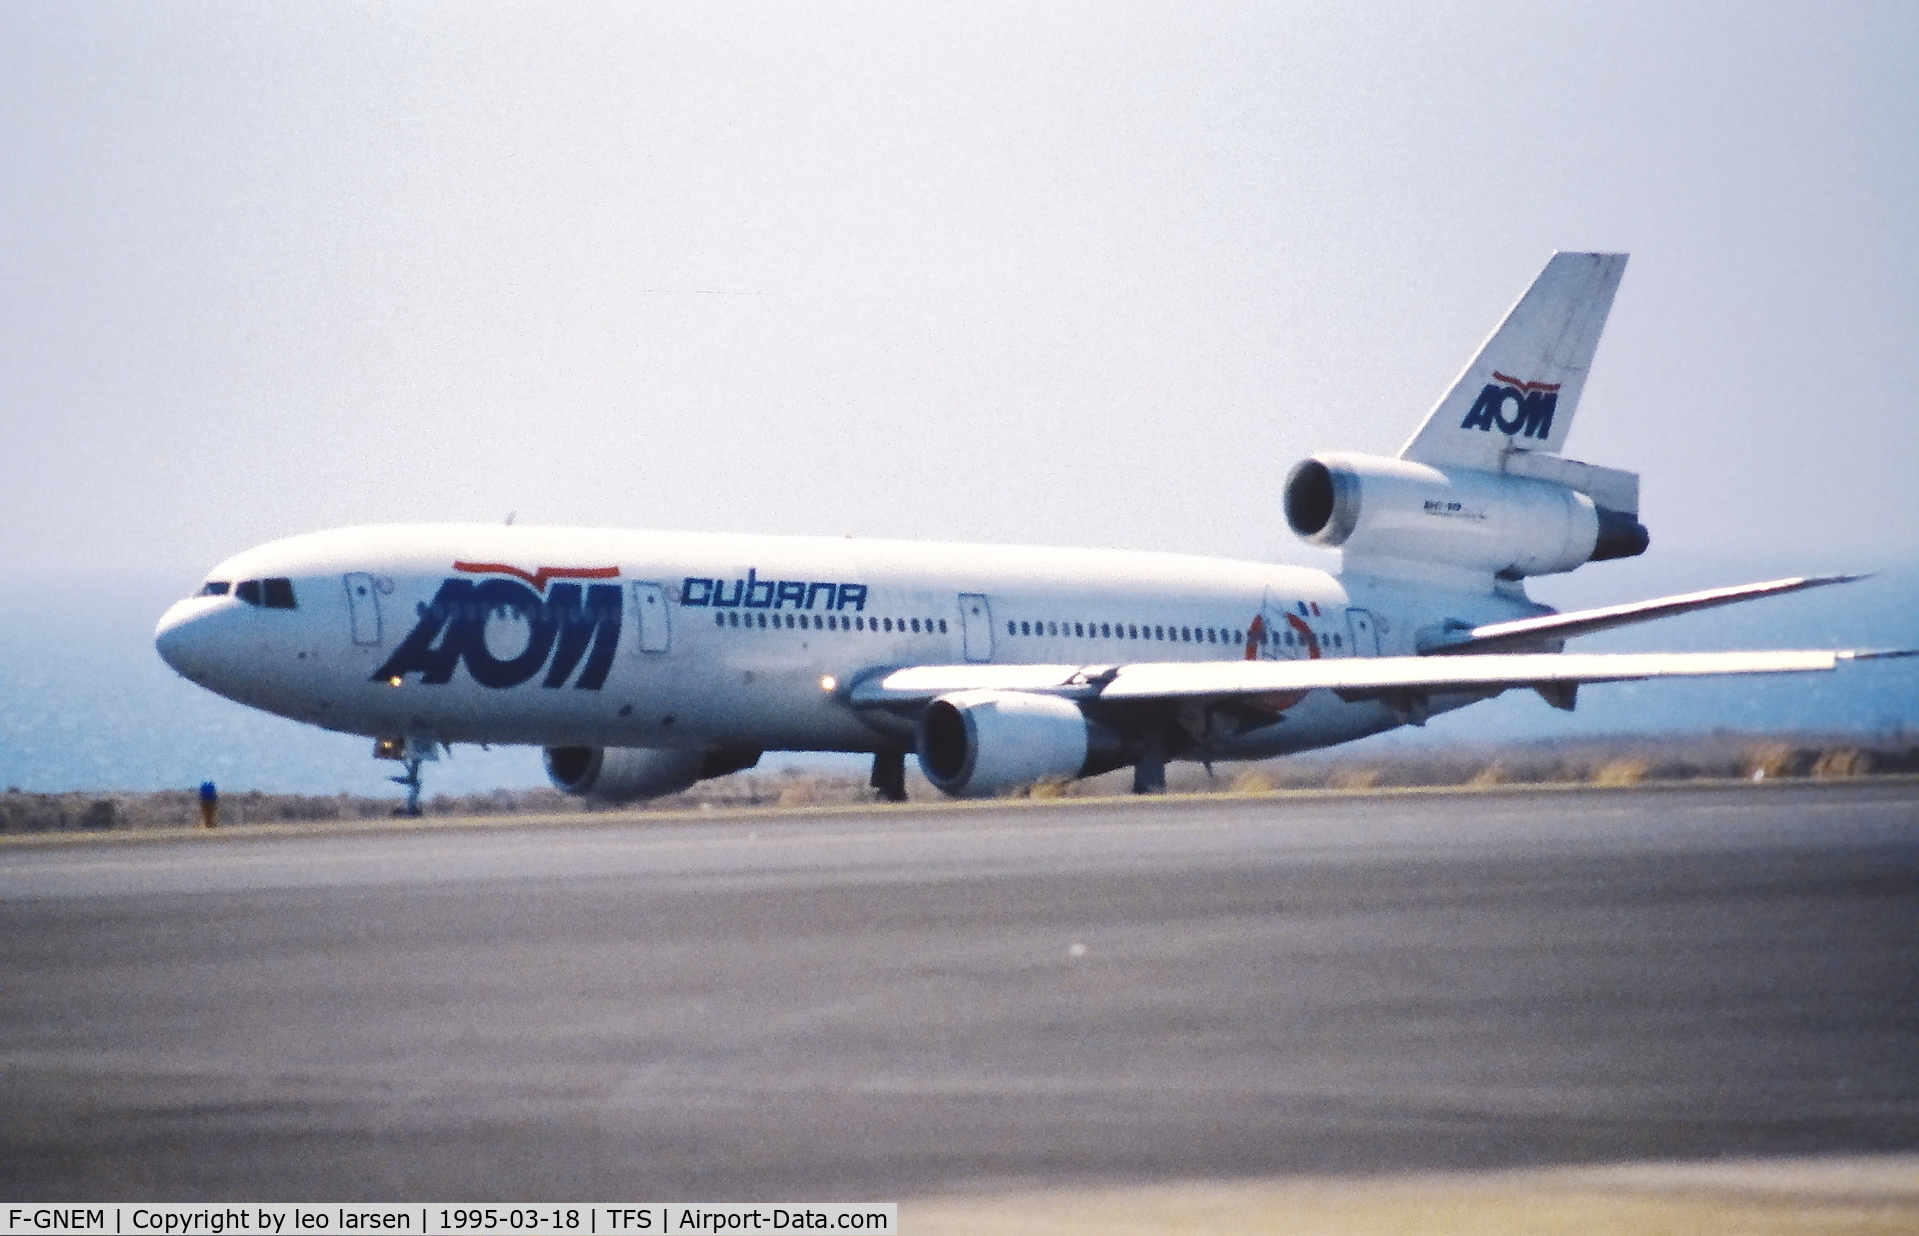 F-GNEM, 1975 McDonnell Douglas DC-10-30 C/N 46892, Tenerife South 18.3.1995 with Cubana title.